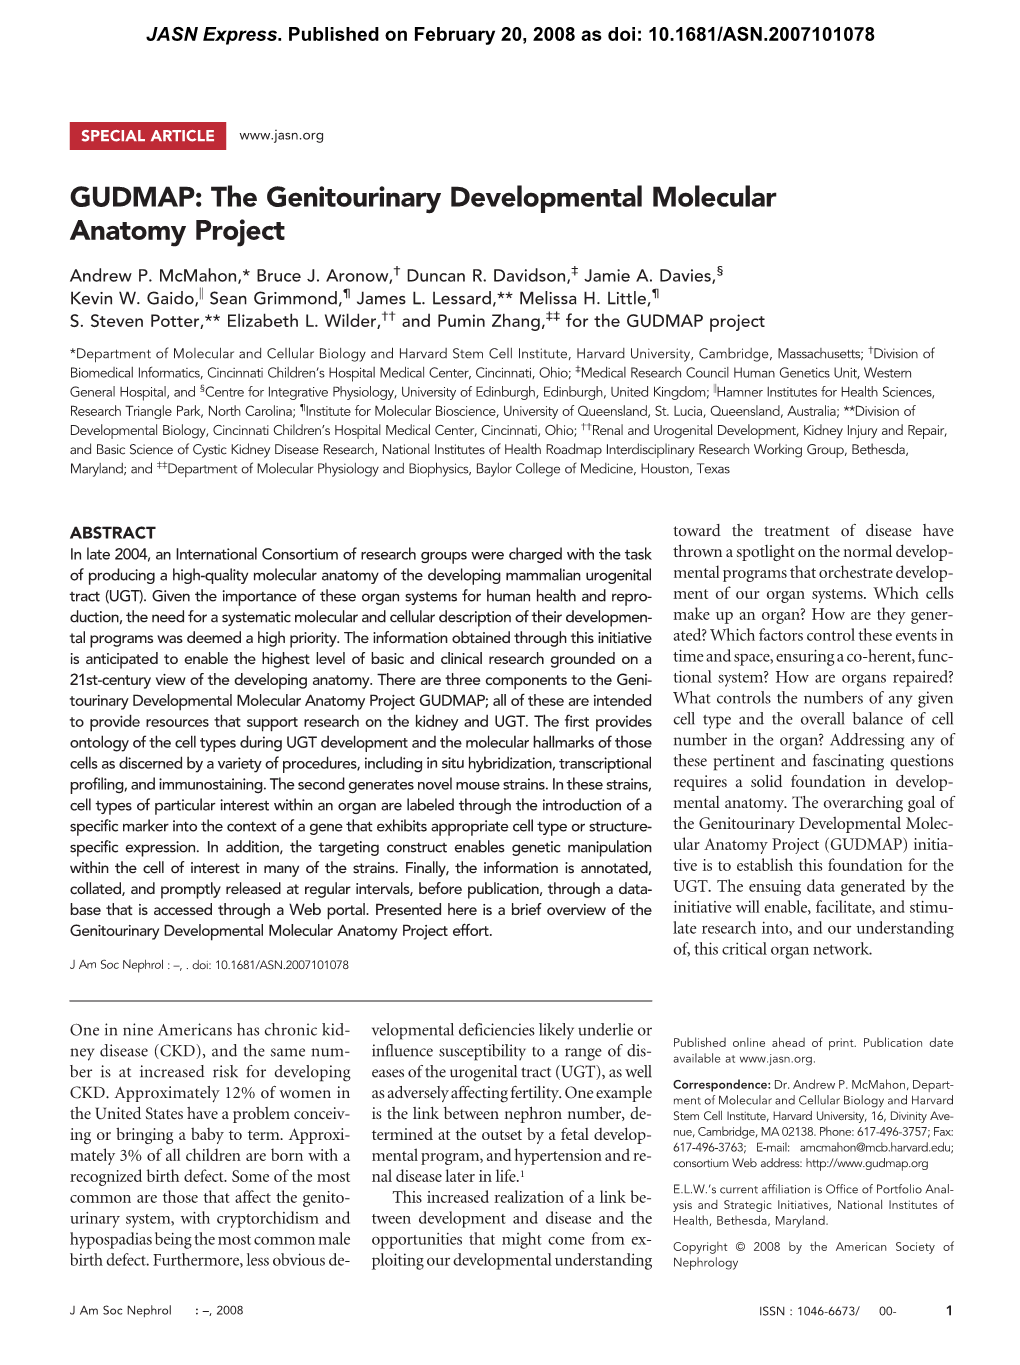 The Genitourinary Developmental Molecular Anatomy Project